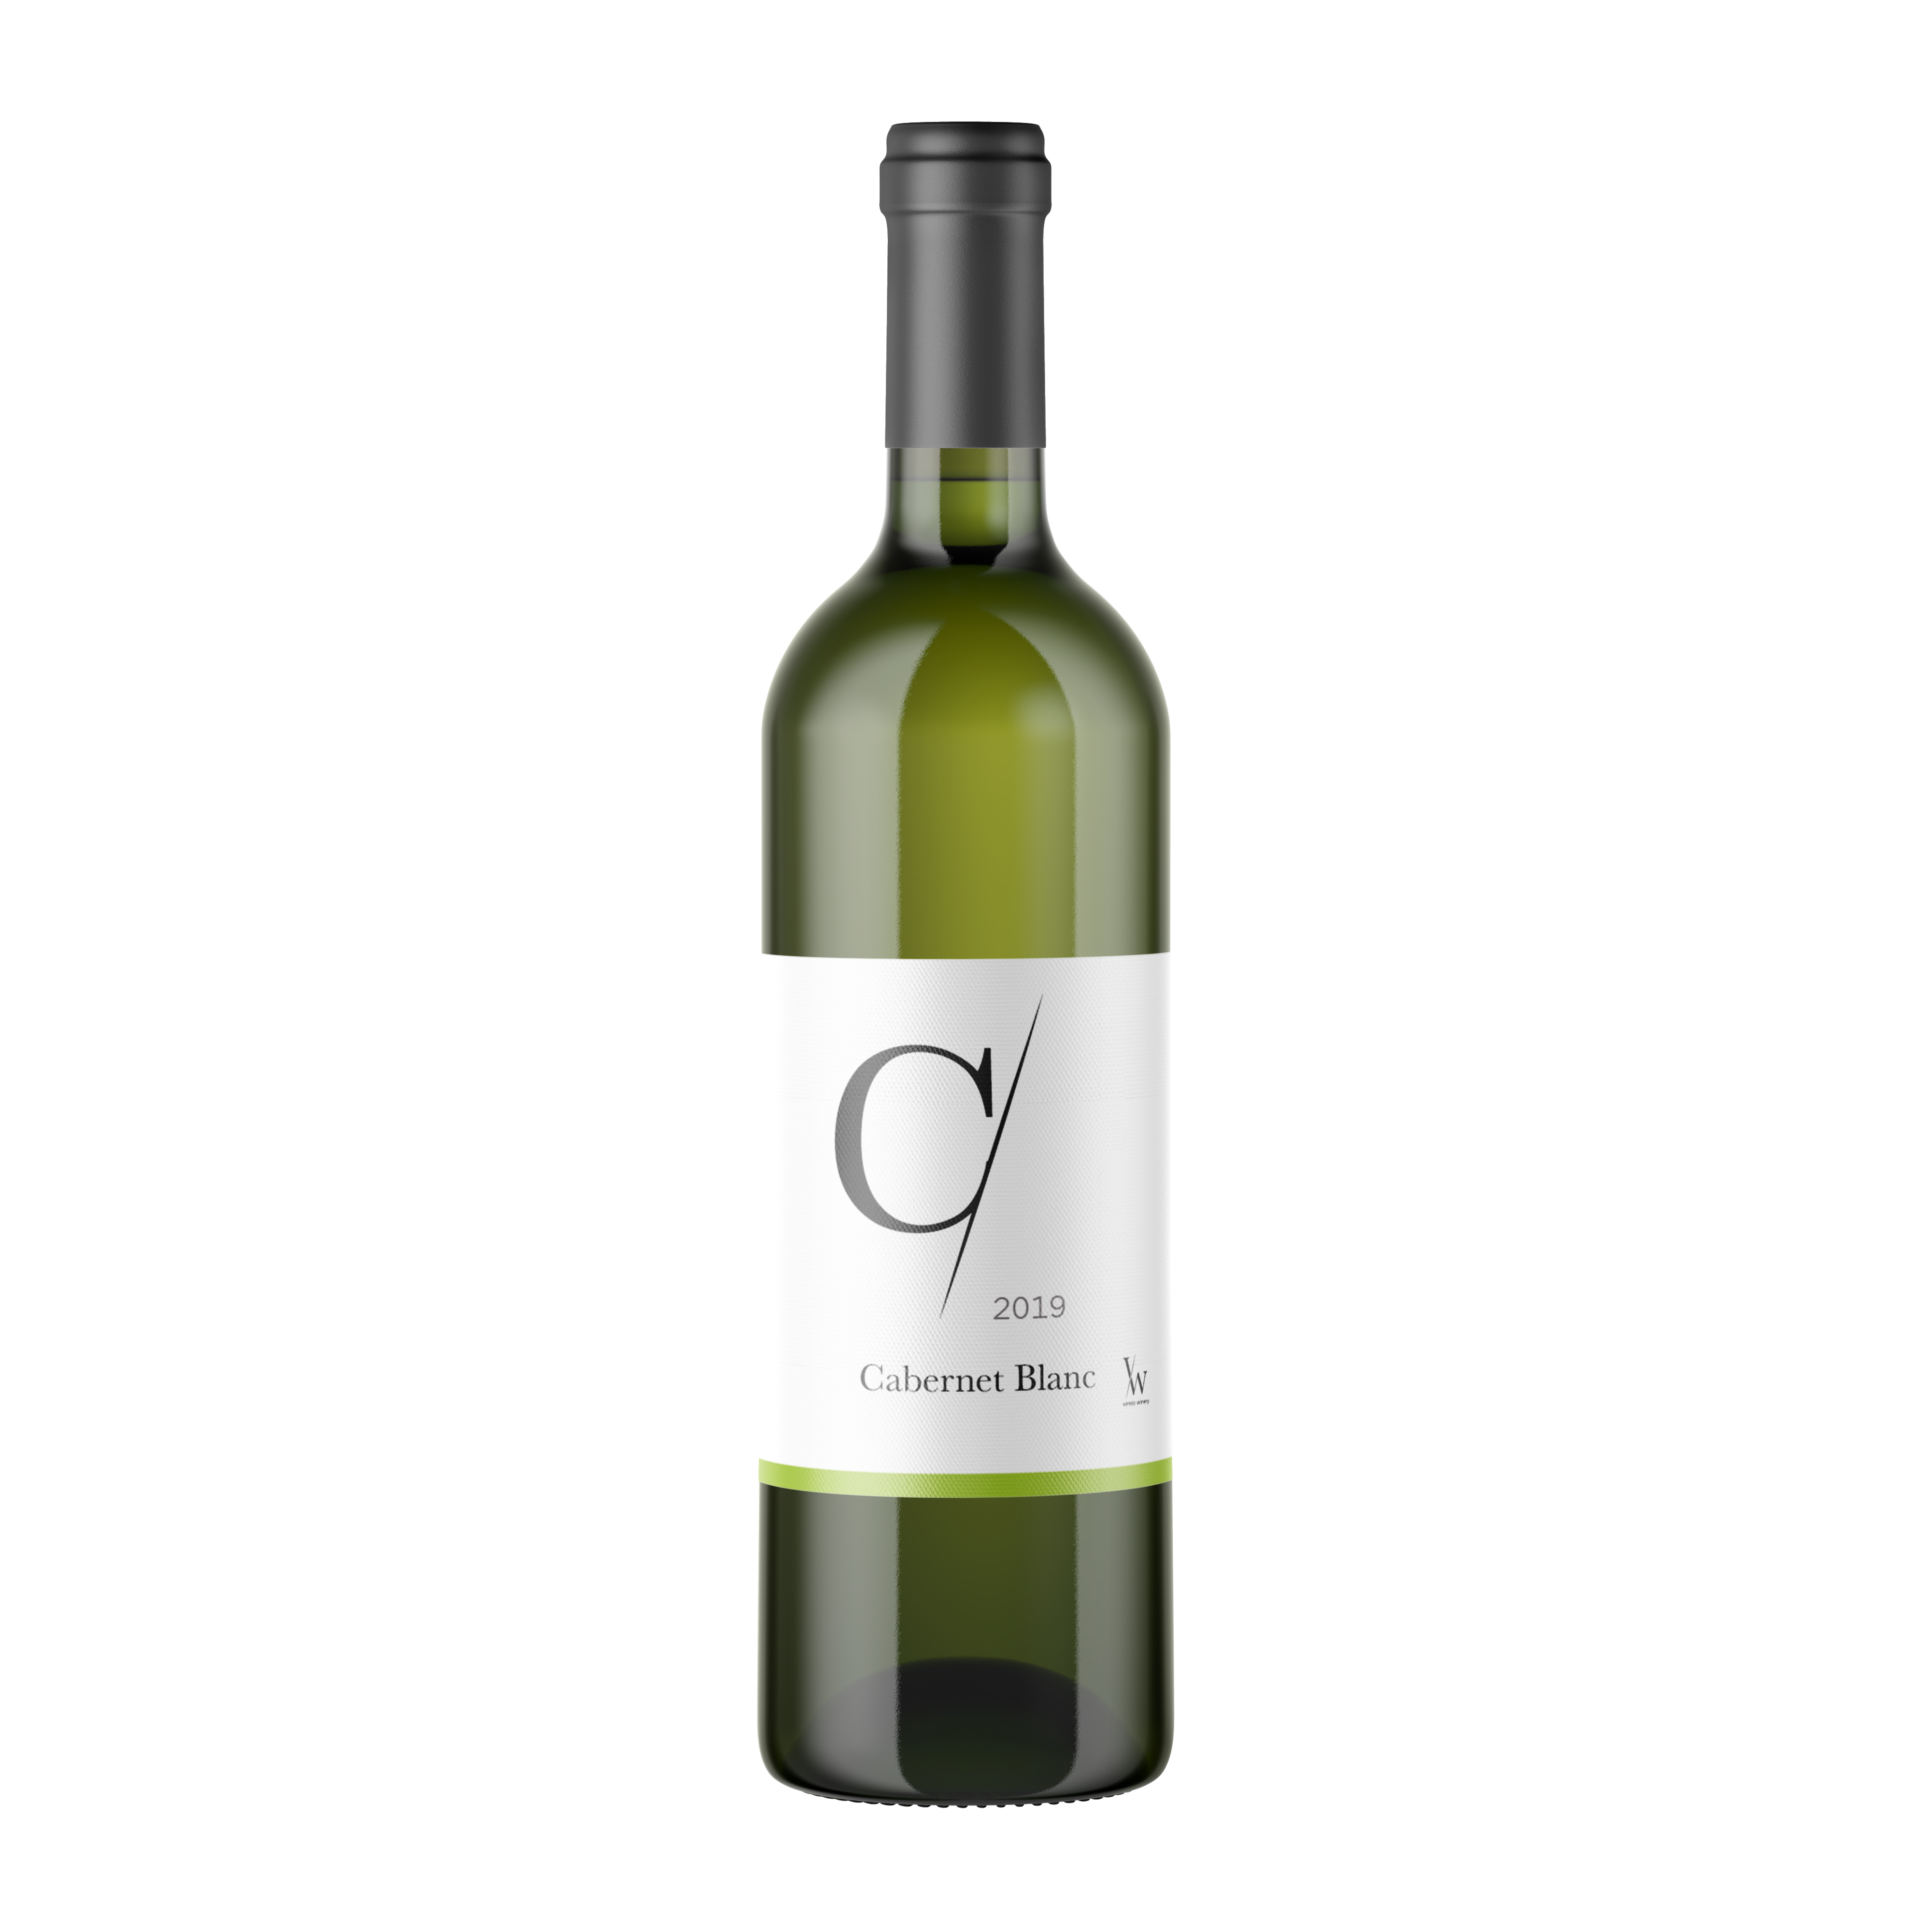 Vinnio Winery - Cabernet blanc 2019